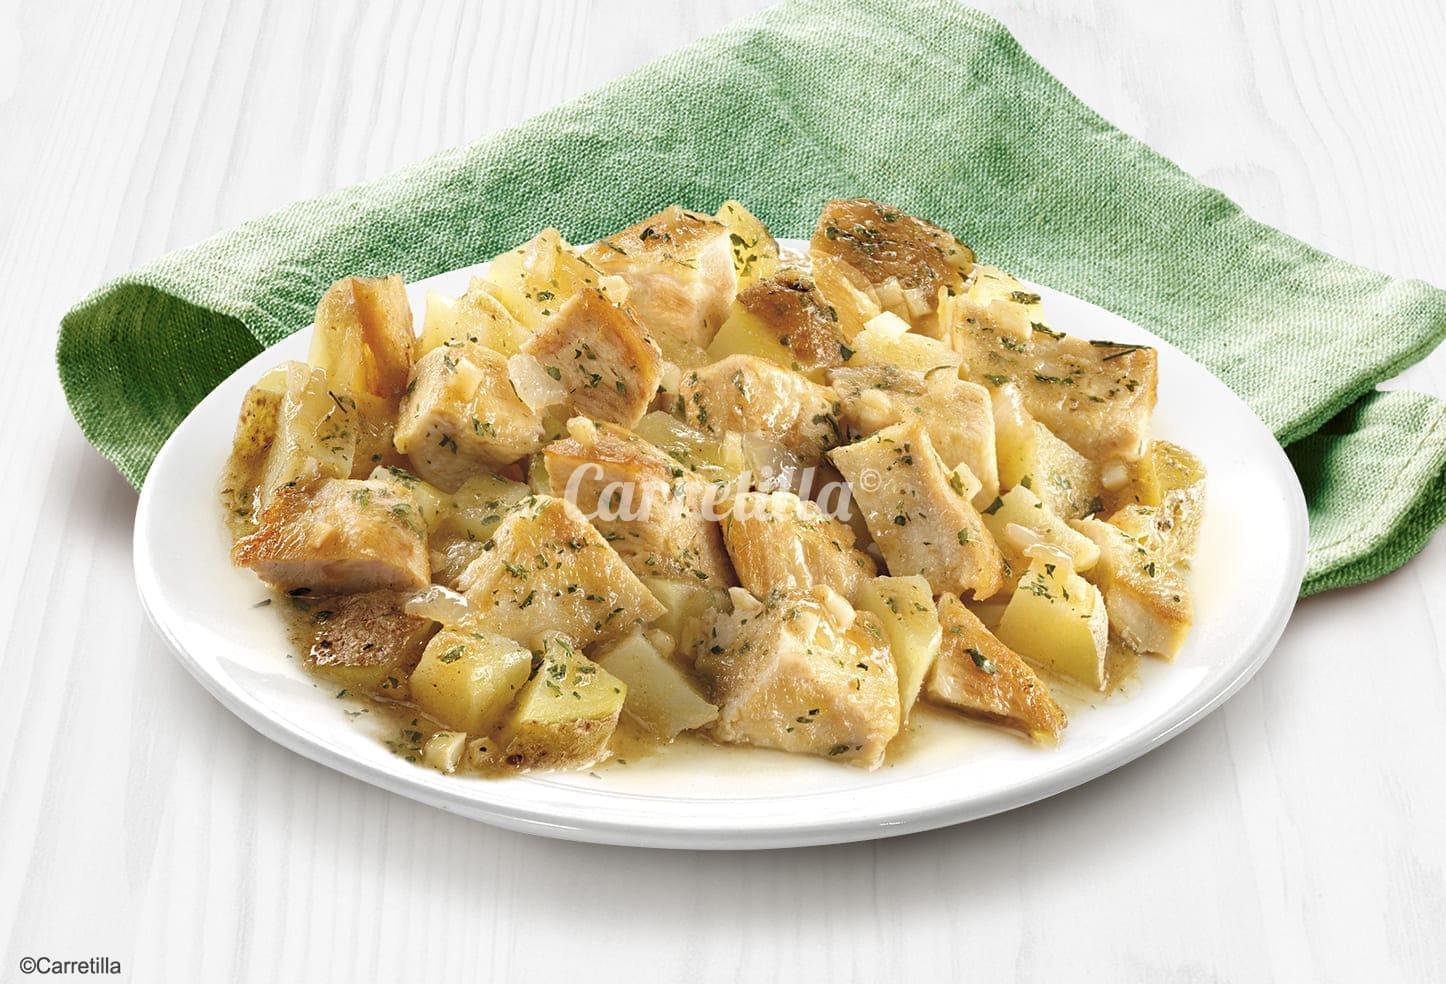 Garlic Chicken with Roast Potatoes